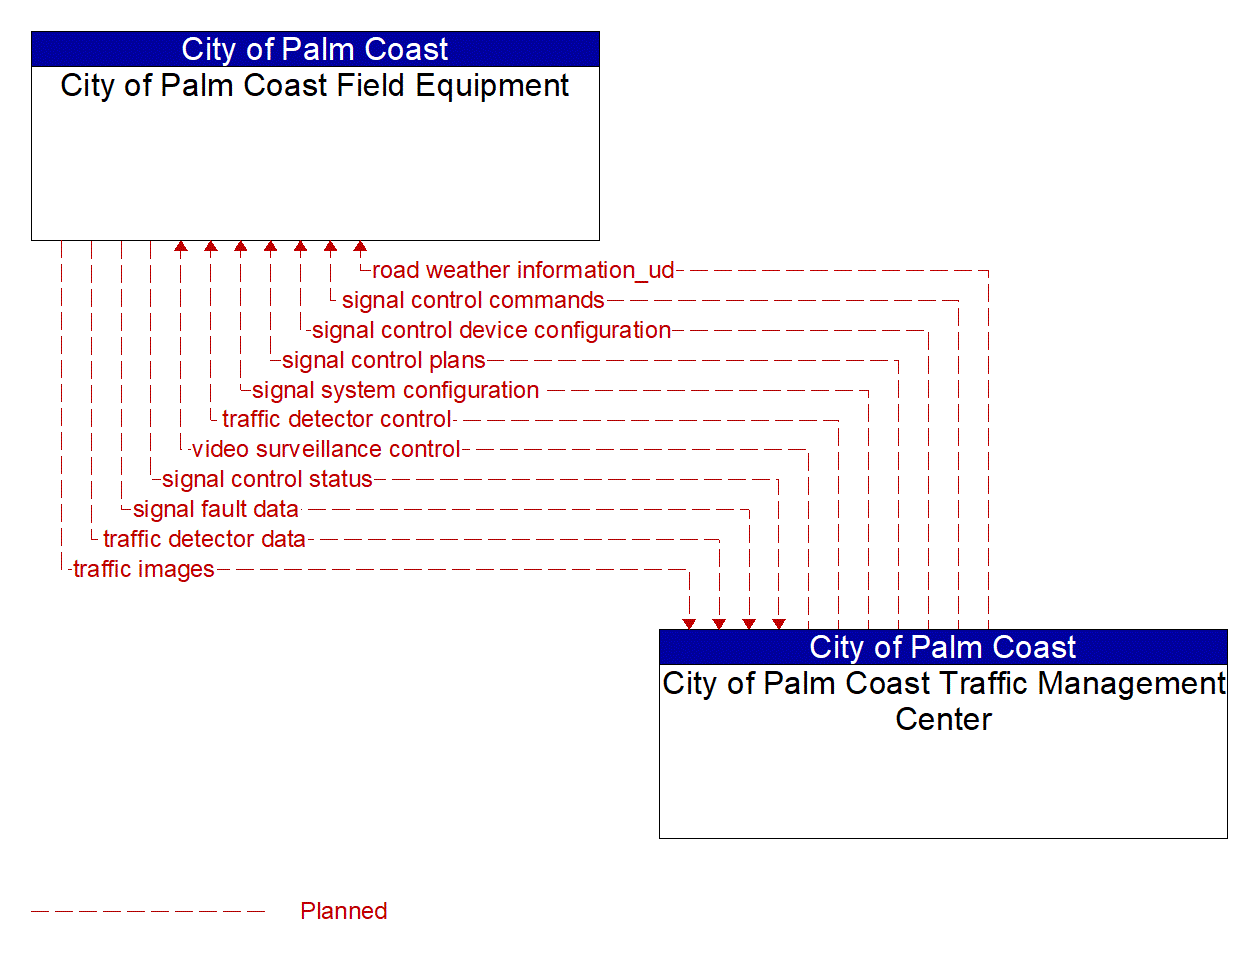 Architecture Flow Diagram: City of Palm Coast Traffic Management Center <--> City of Palm Coast Field Equipment